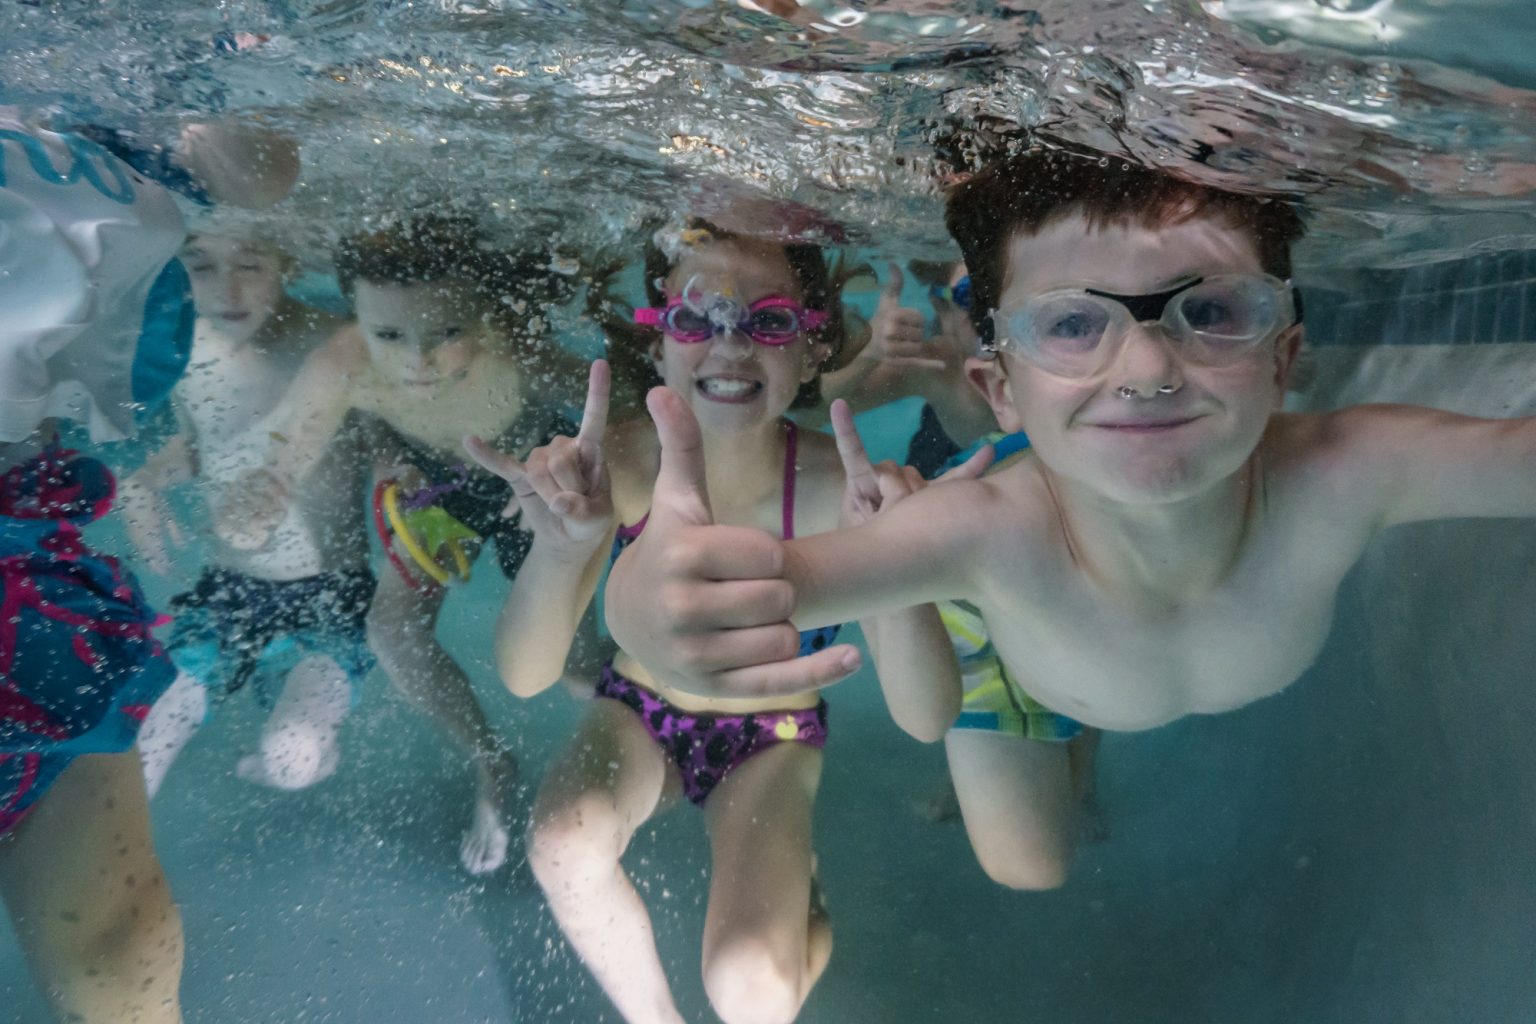 Kids underwater at the pool